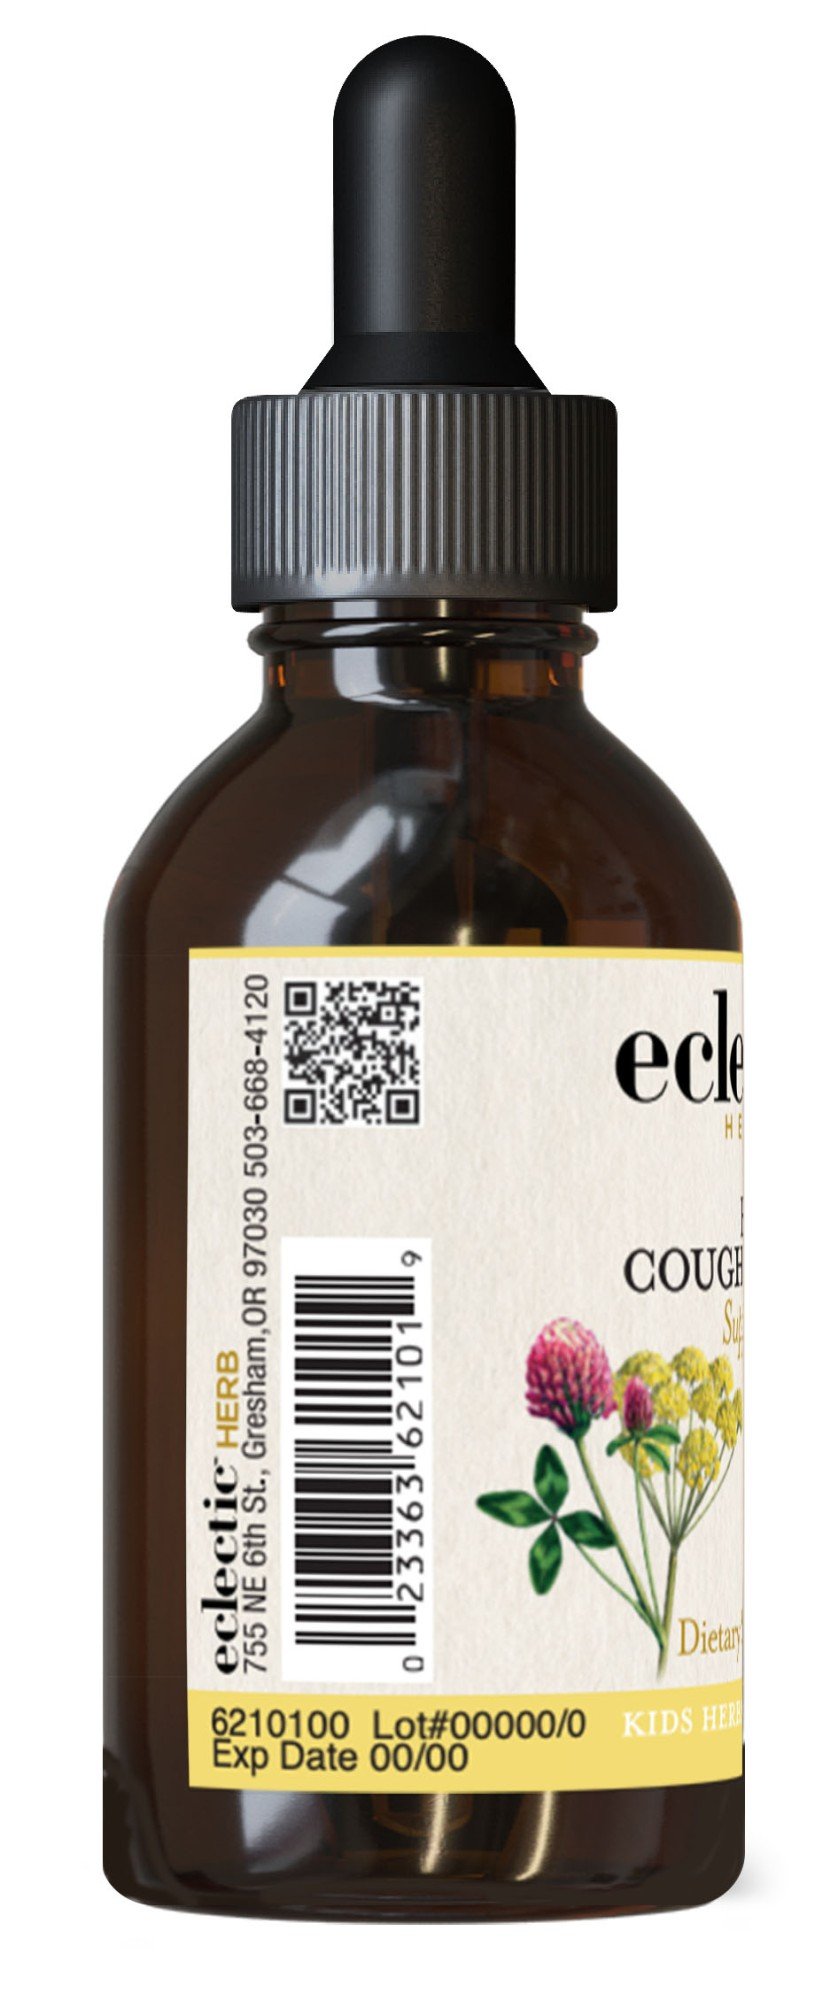 Eclectic Herb Kids Herbal Cough Elixir - Black Cherry Flavor No Alcohol 1 oz Liquid